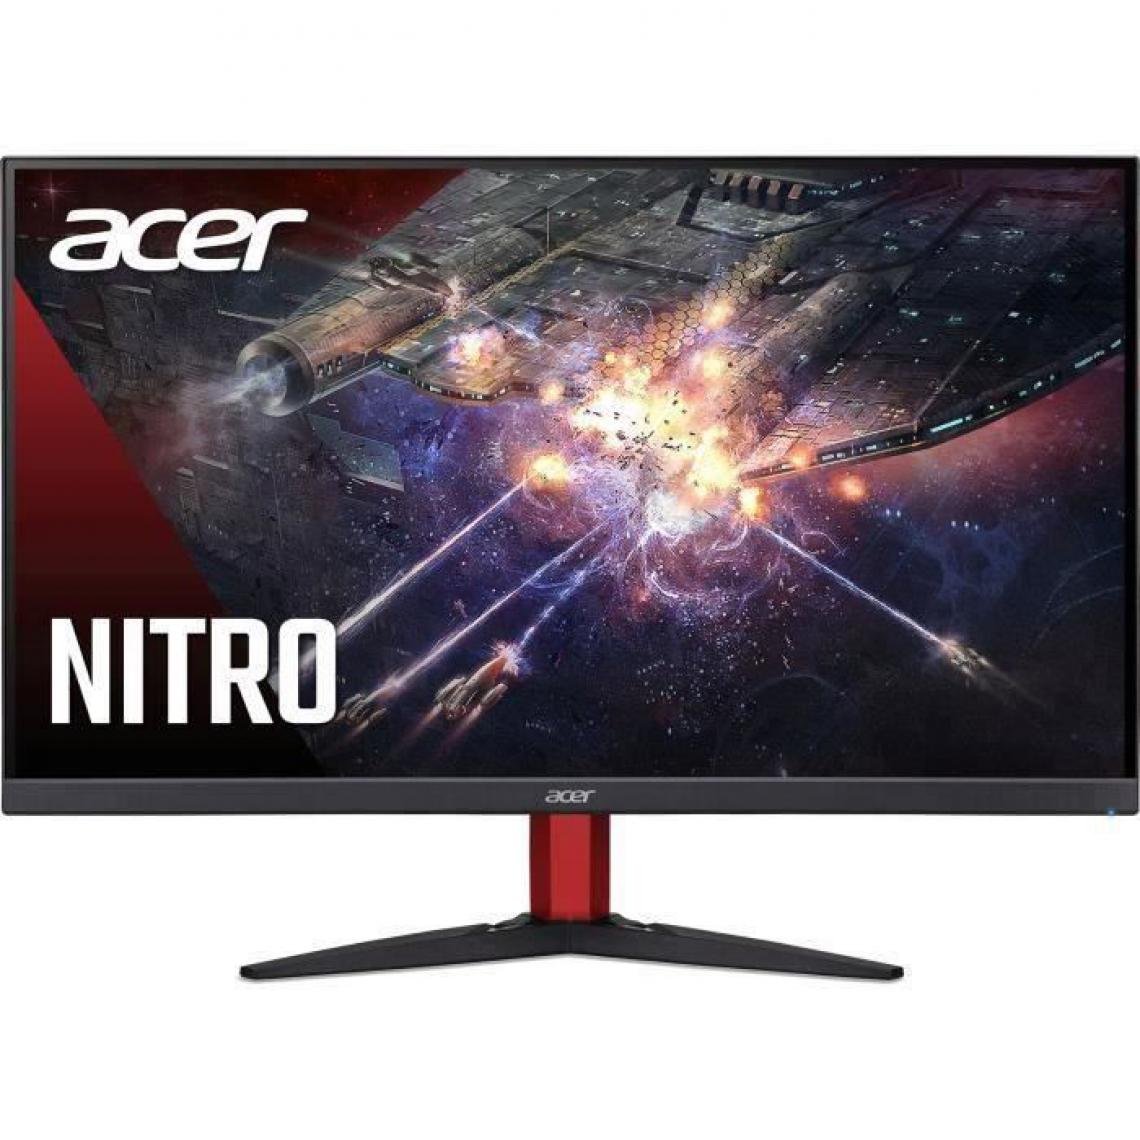 Acer - Ecran PC Gamer - ACER Nitro KG272Sbmiipx - 27 FHD - Dalle IPS - 0.5 - 144Hz - 2 x HDMI / DisplayPort 1.2 - AMD FreeSync - Moniteur PC